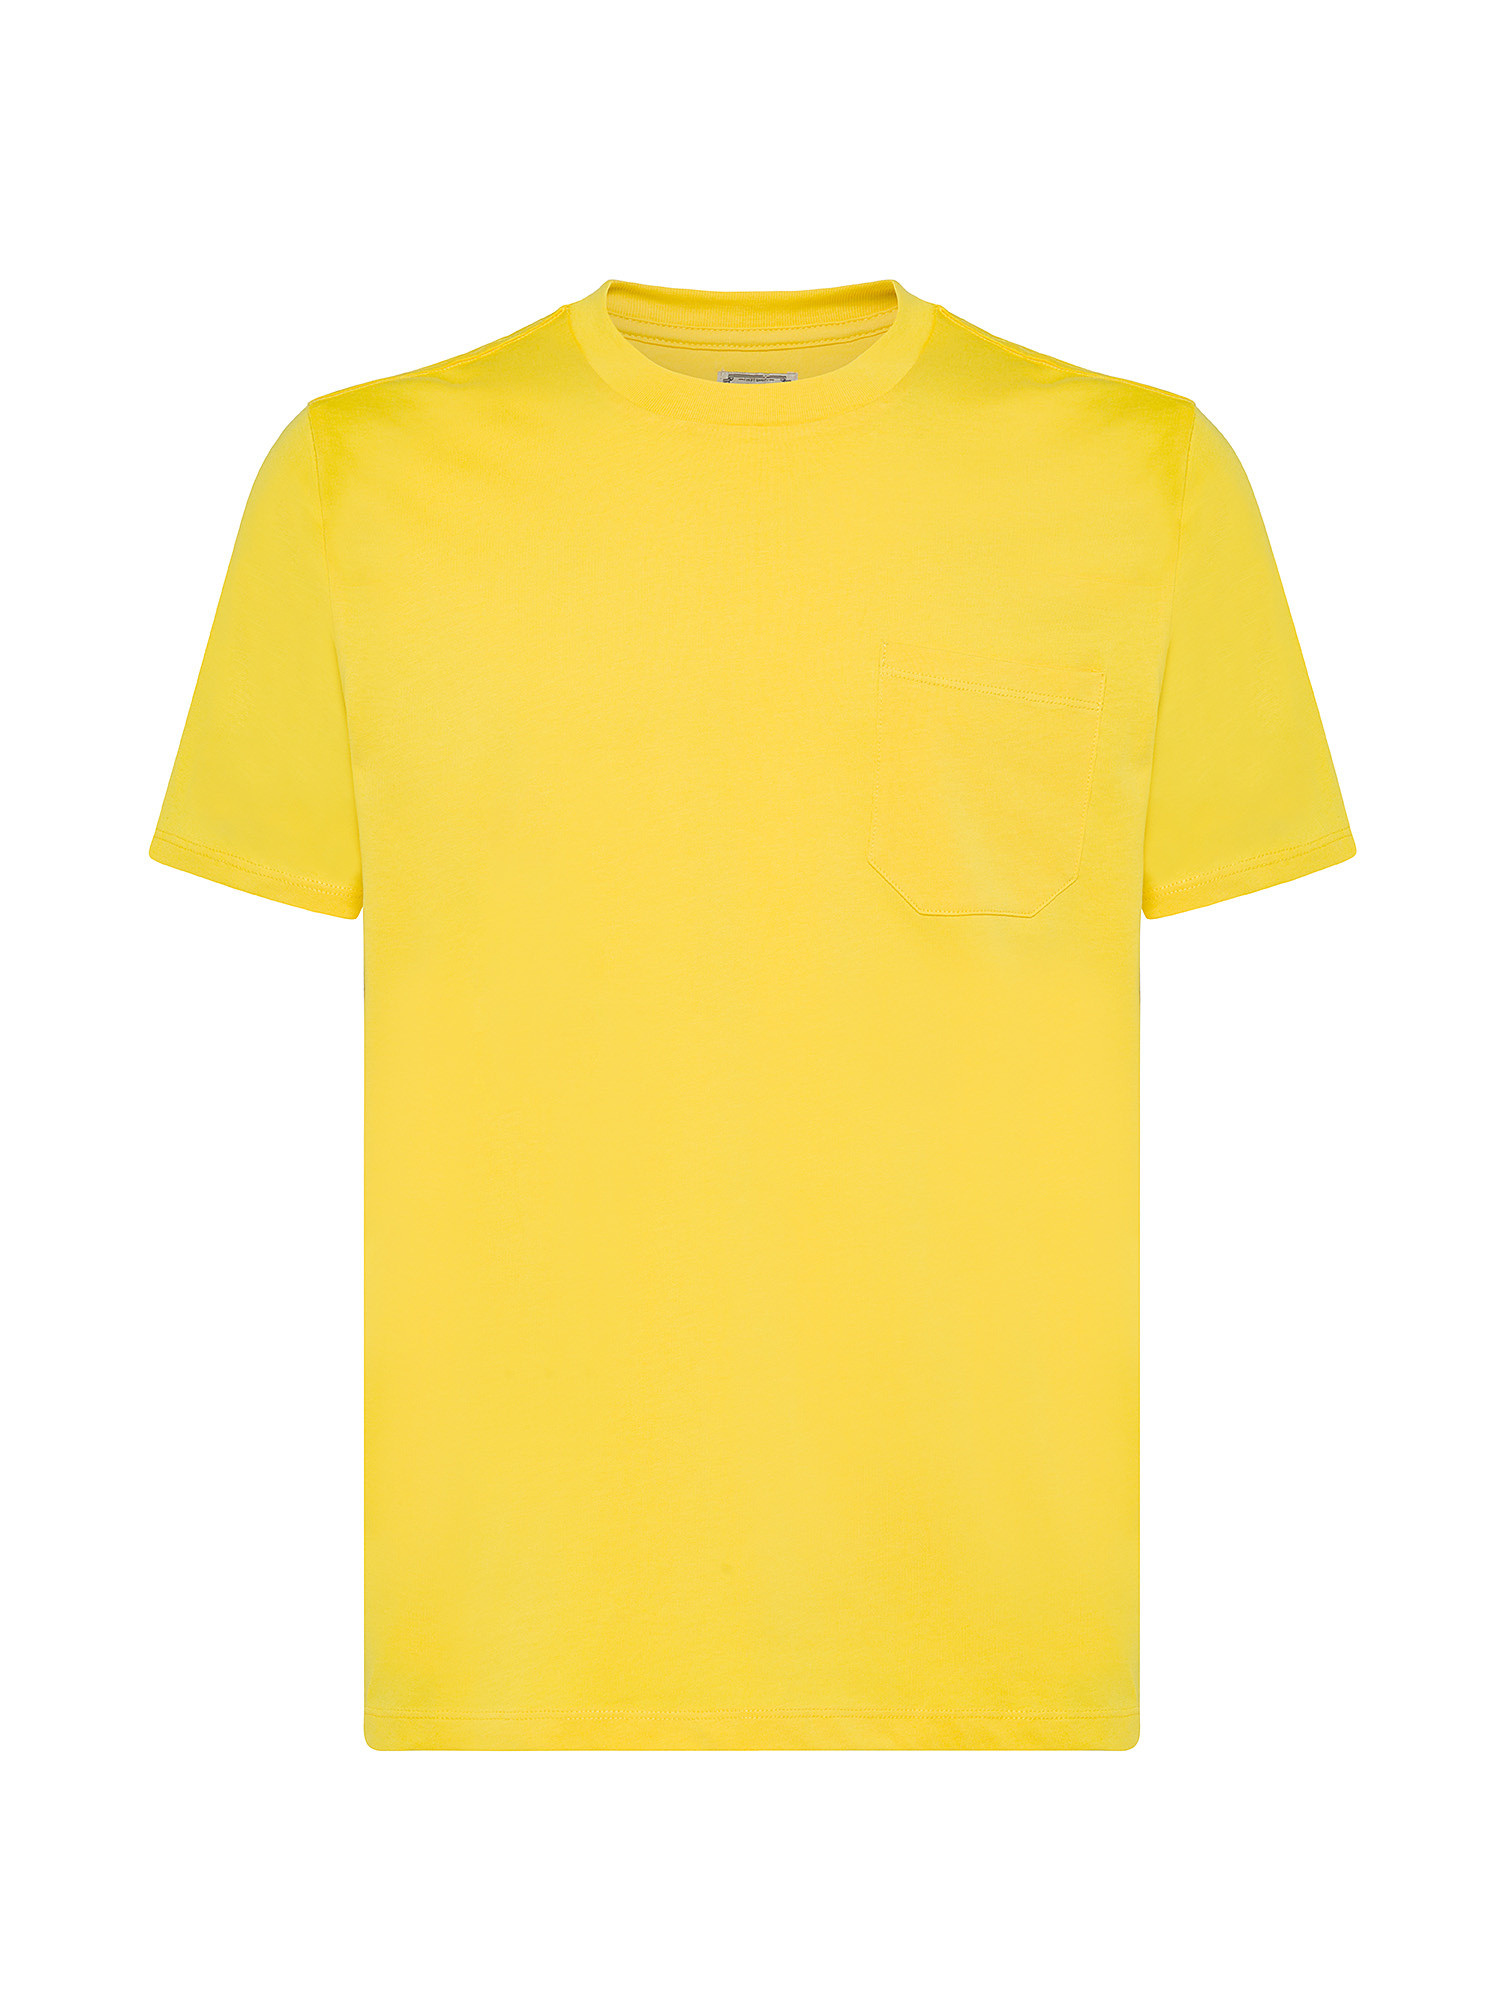 JCT - Pure supima cotton T-shirt, Lemon Yellow, large image number 0